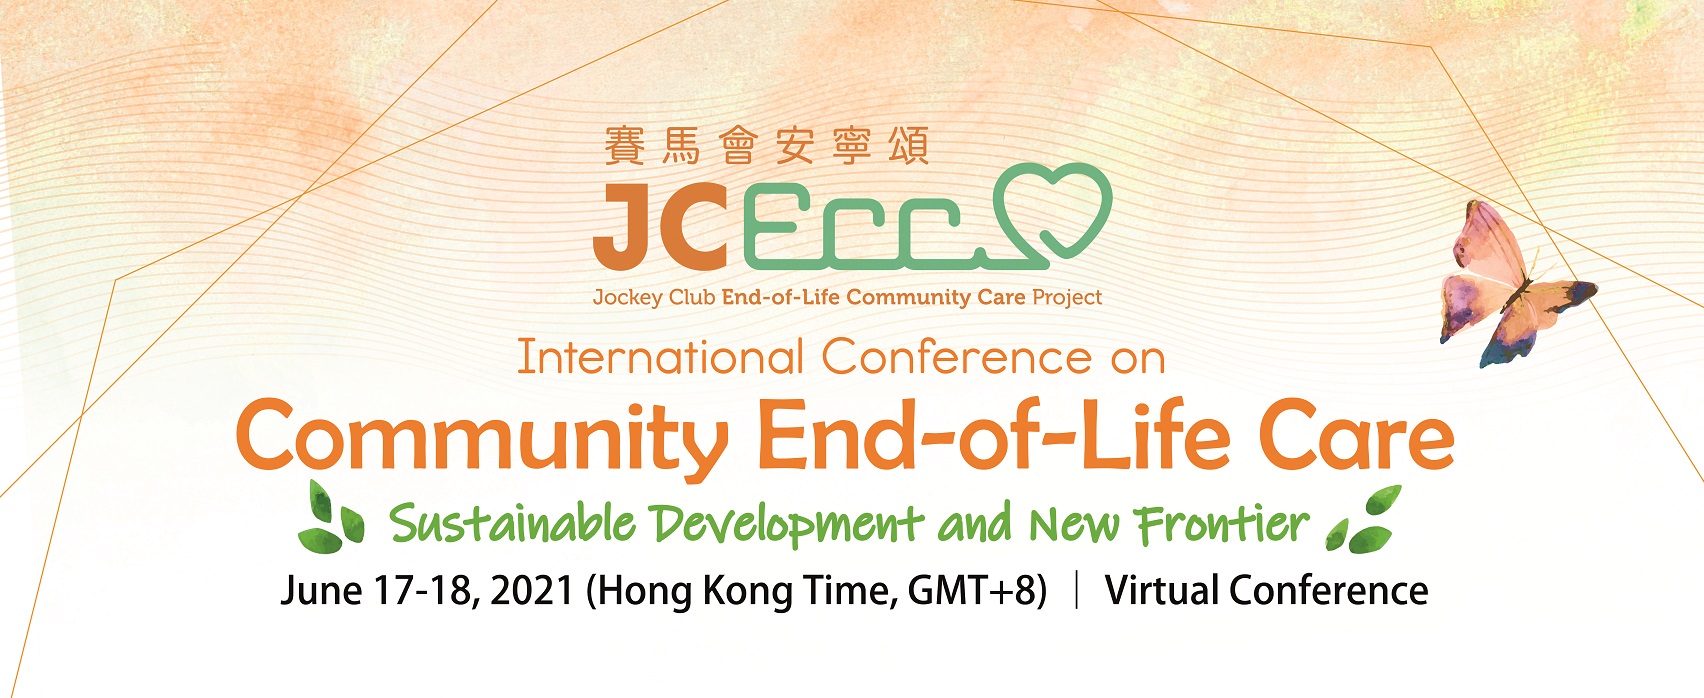 JCECC_Conference2021_Web banner